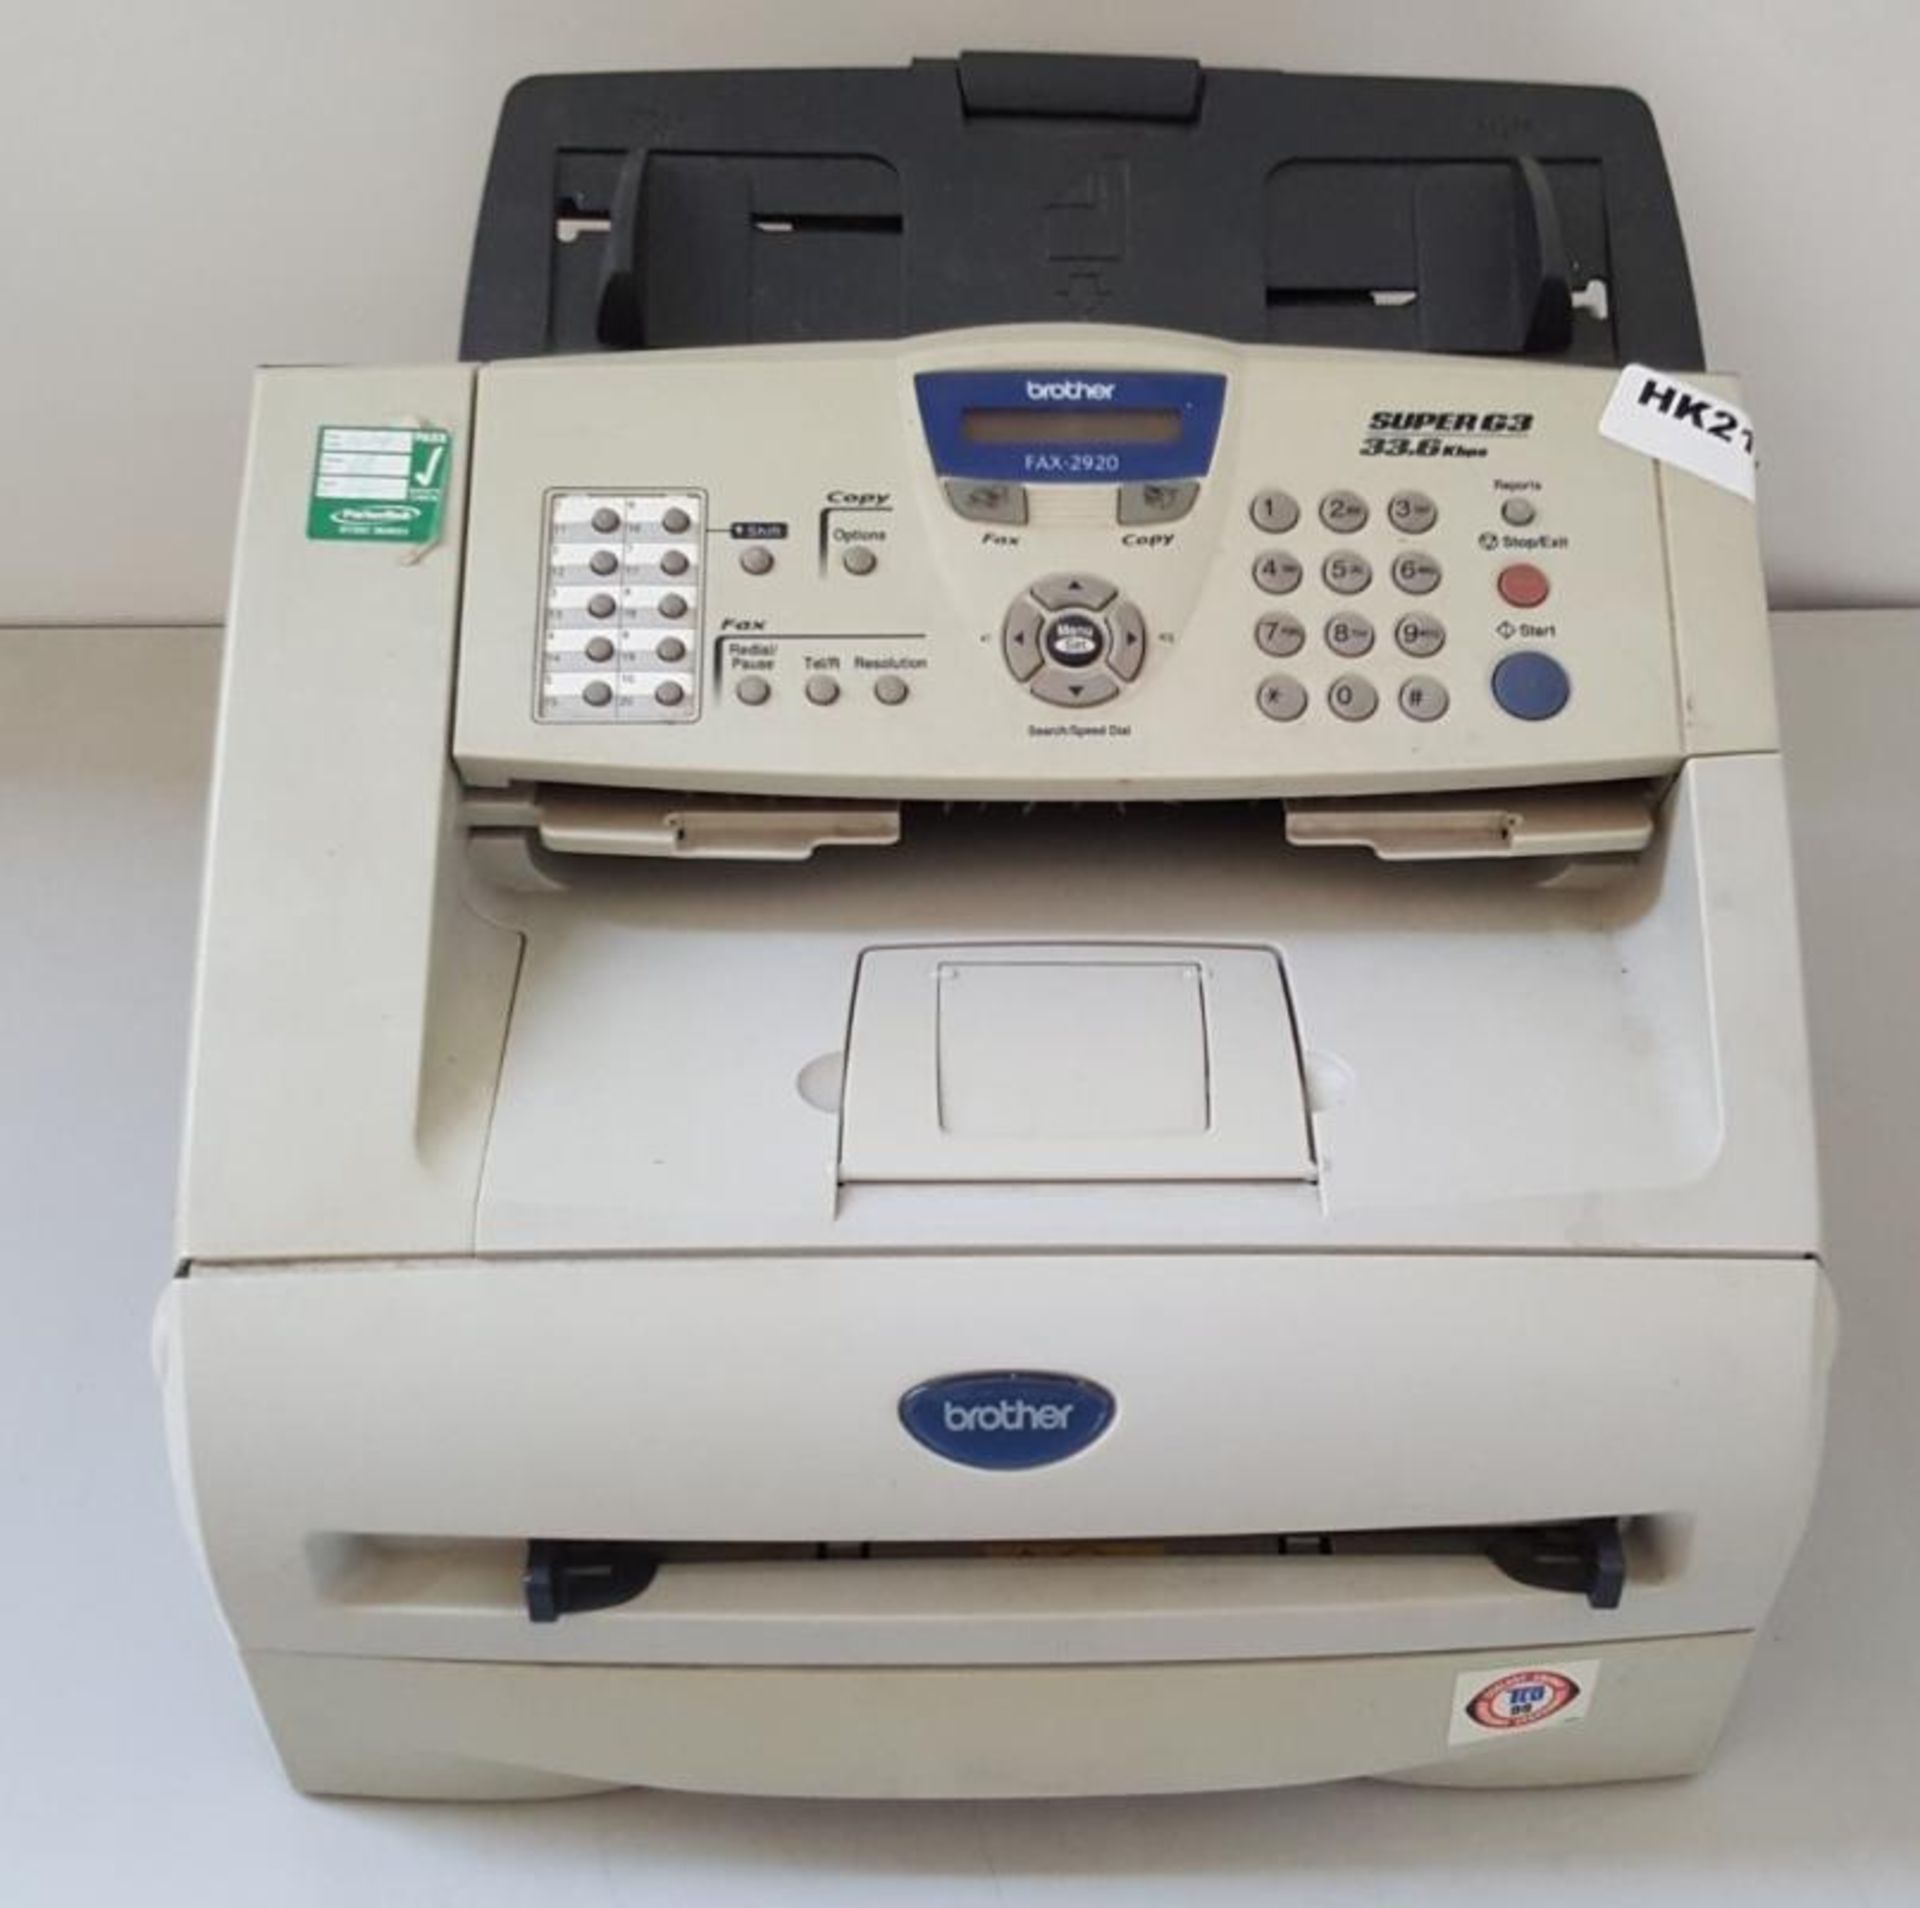 1 x Brother FAX-2920 A4 Fax Machine - Ref HK218 AB2 - CL394 - Location: Altrincham WA14